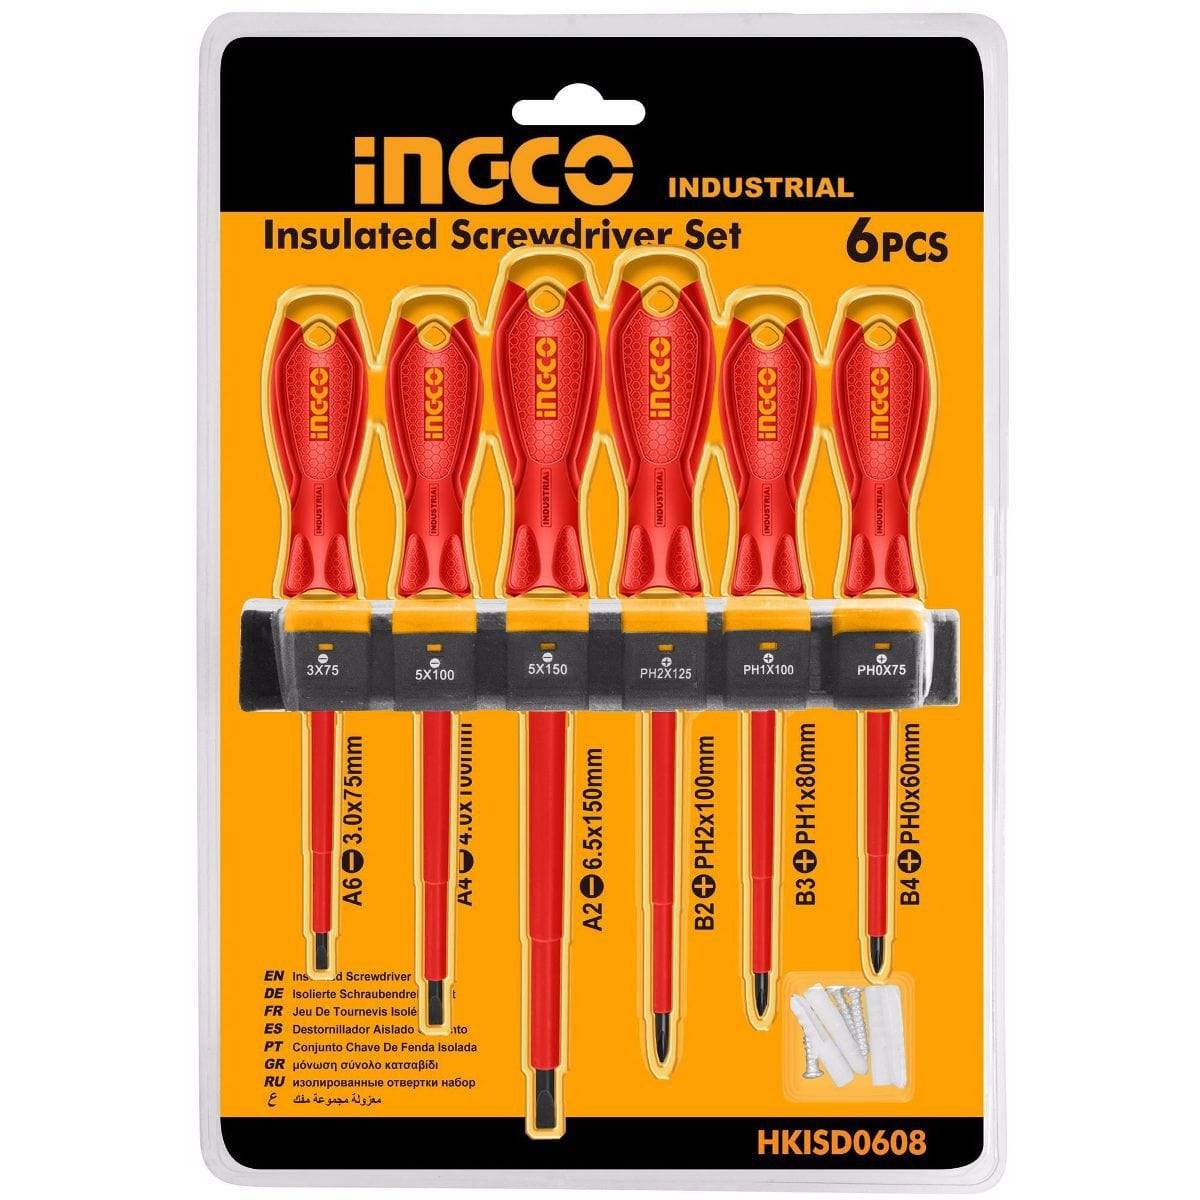 Ingco 6 PCS Insulated Screwdriver Set - HKISD0608 supply-master